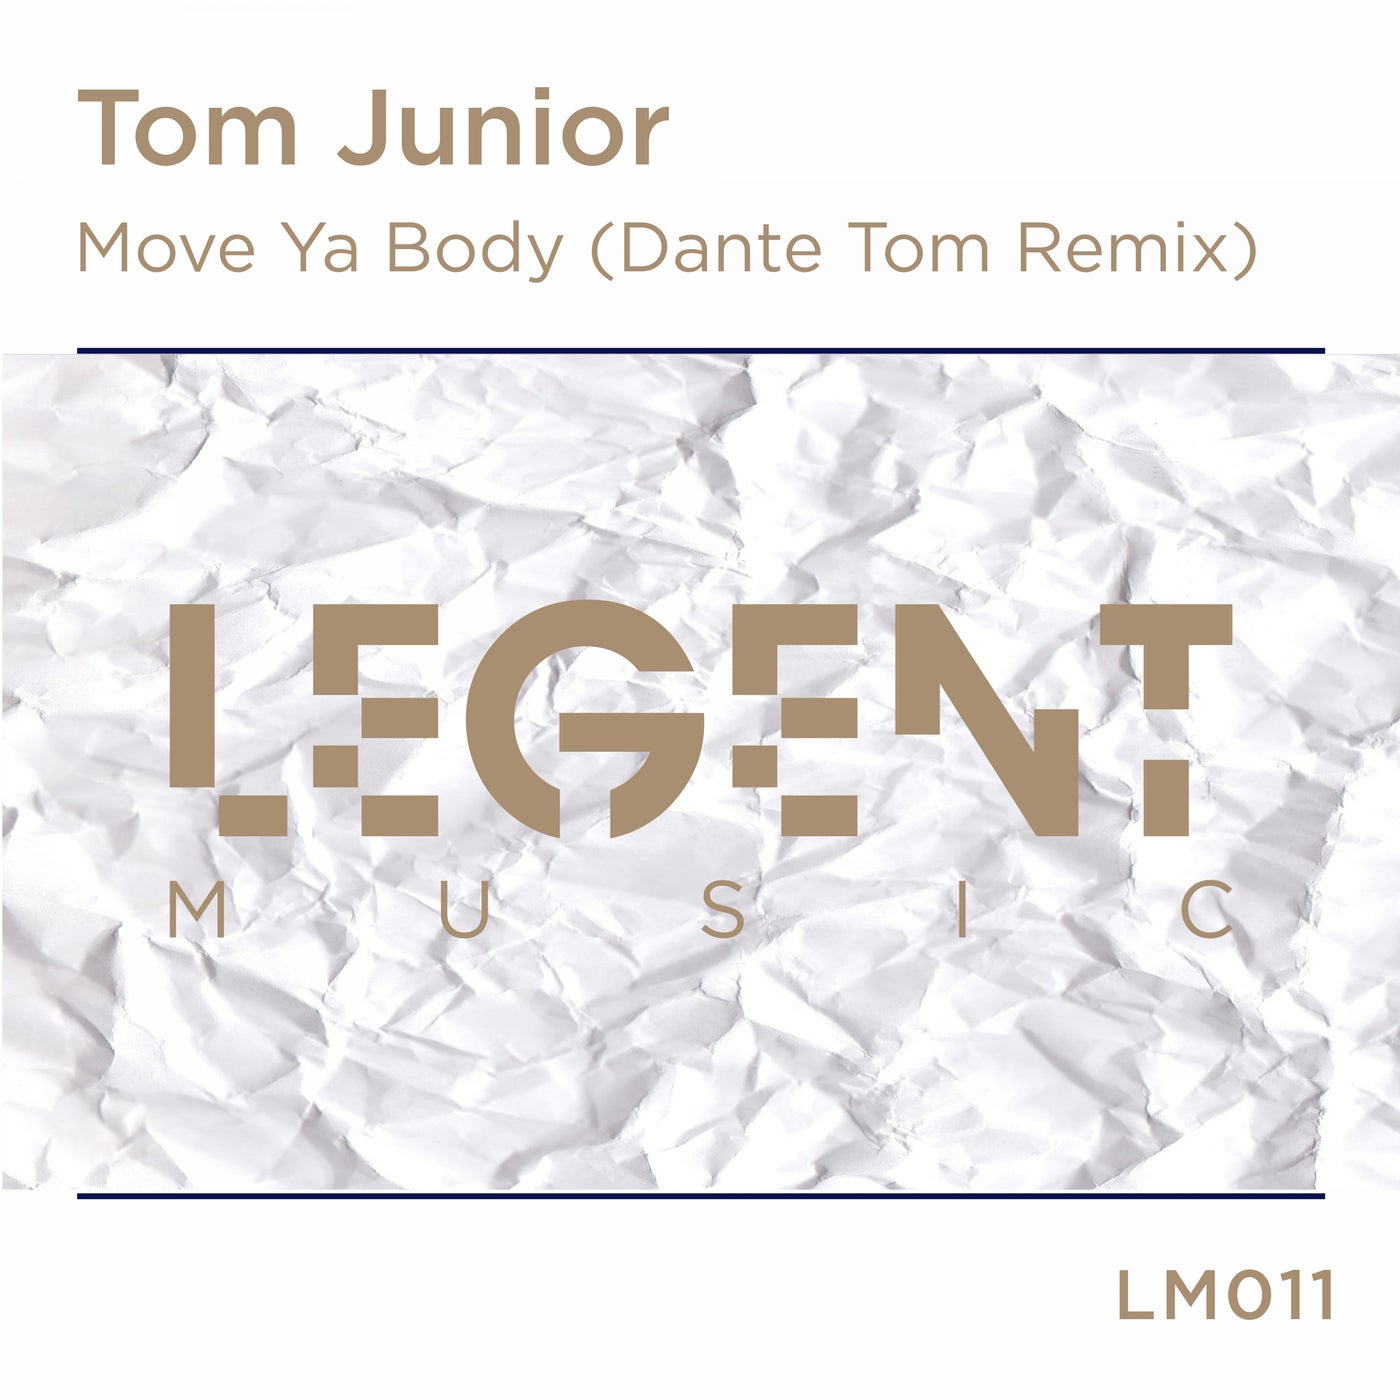 Move Ya Body (Dante Tom Remix)